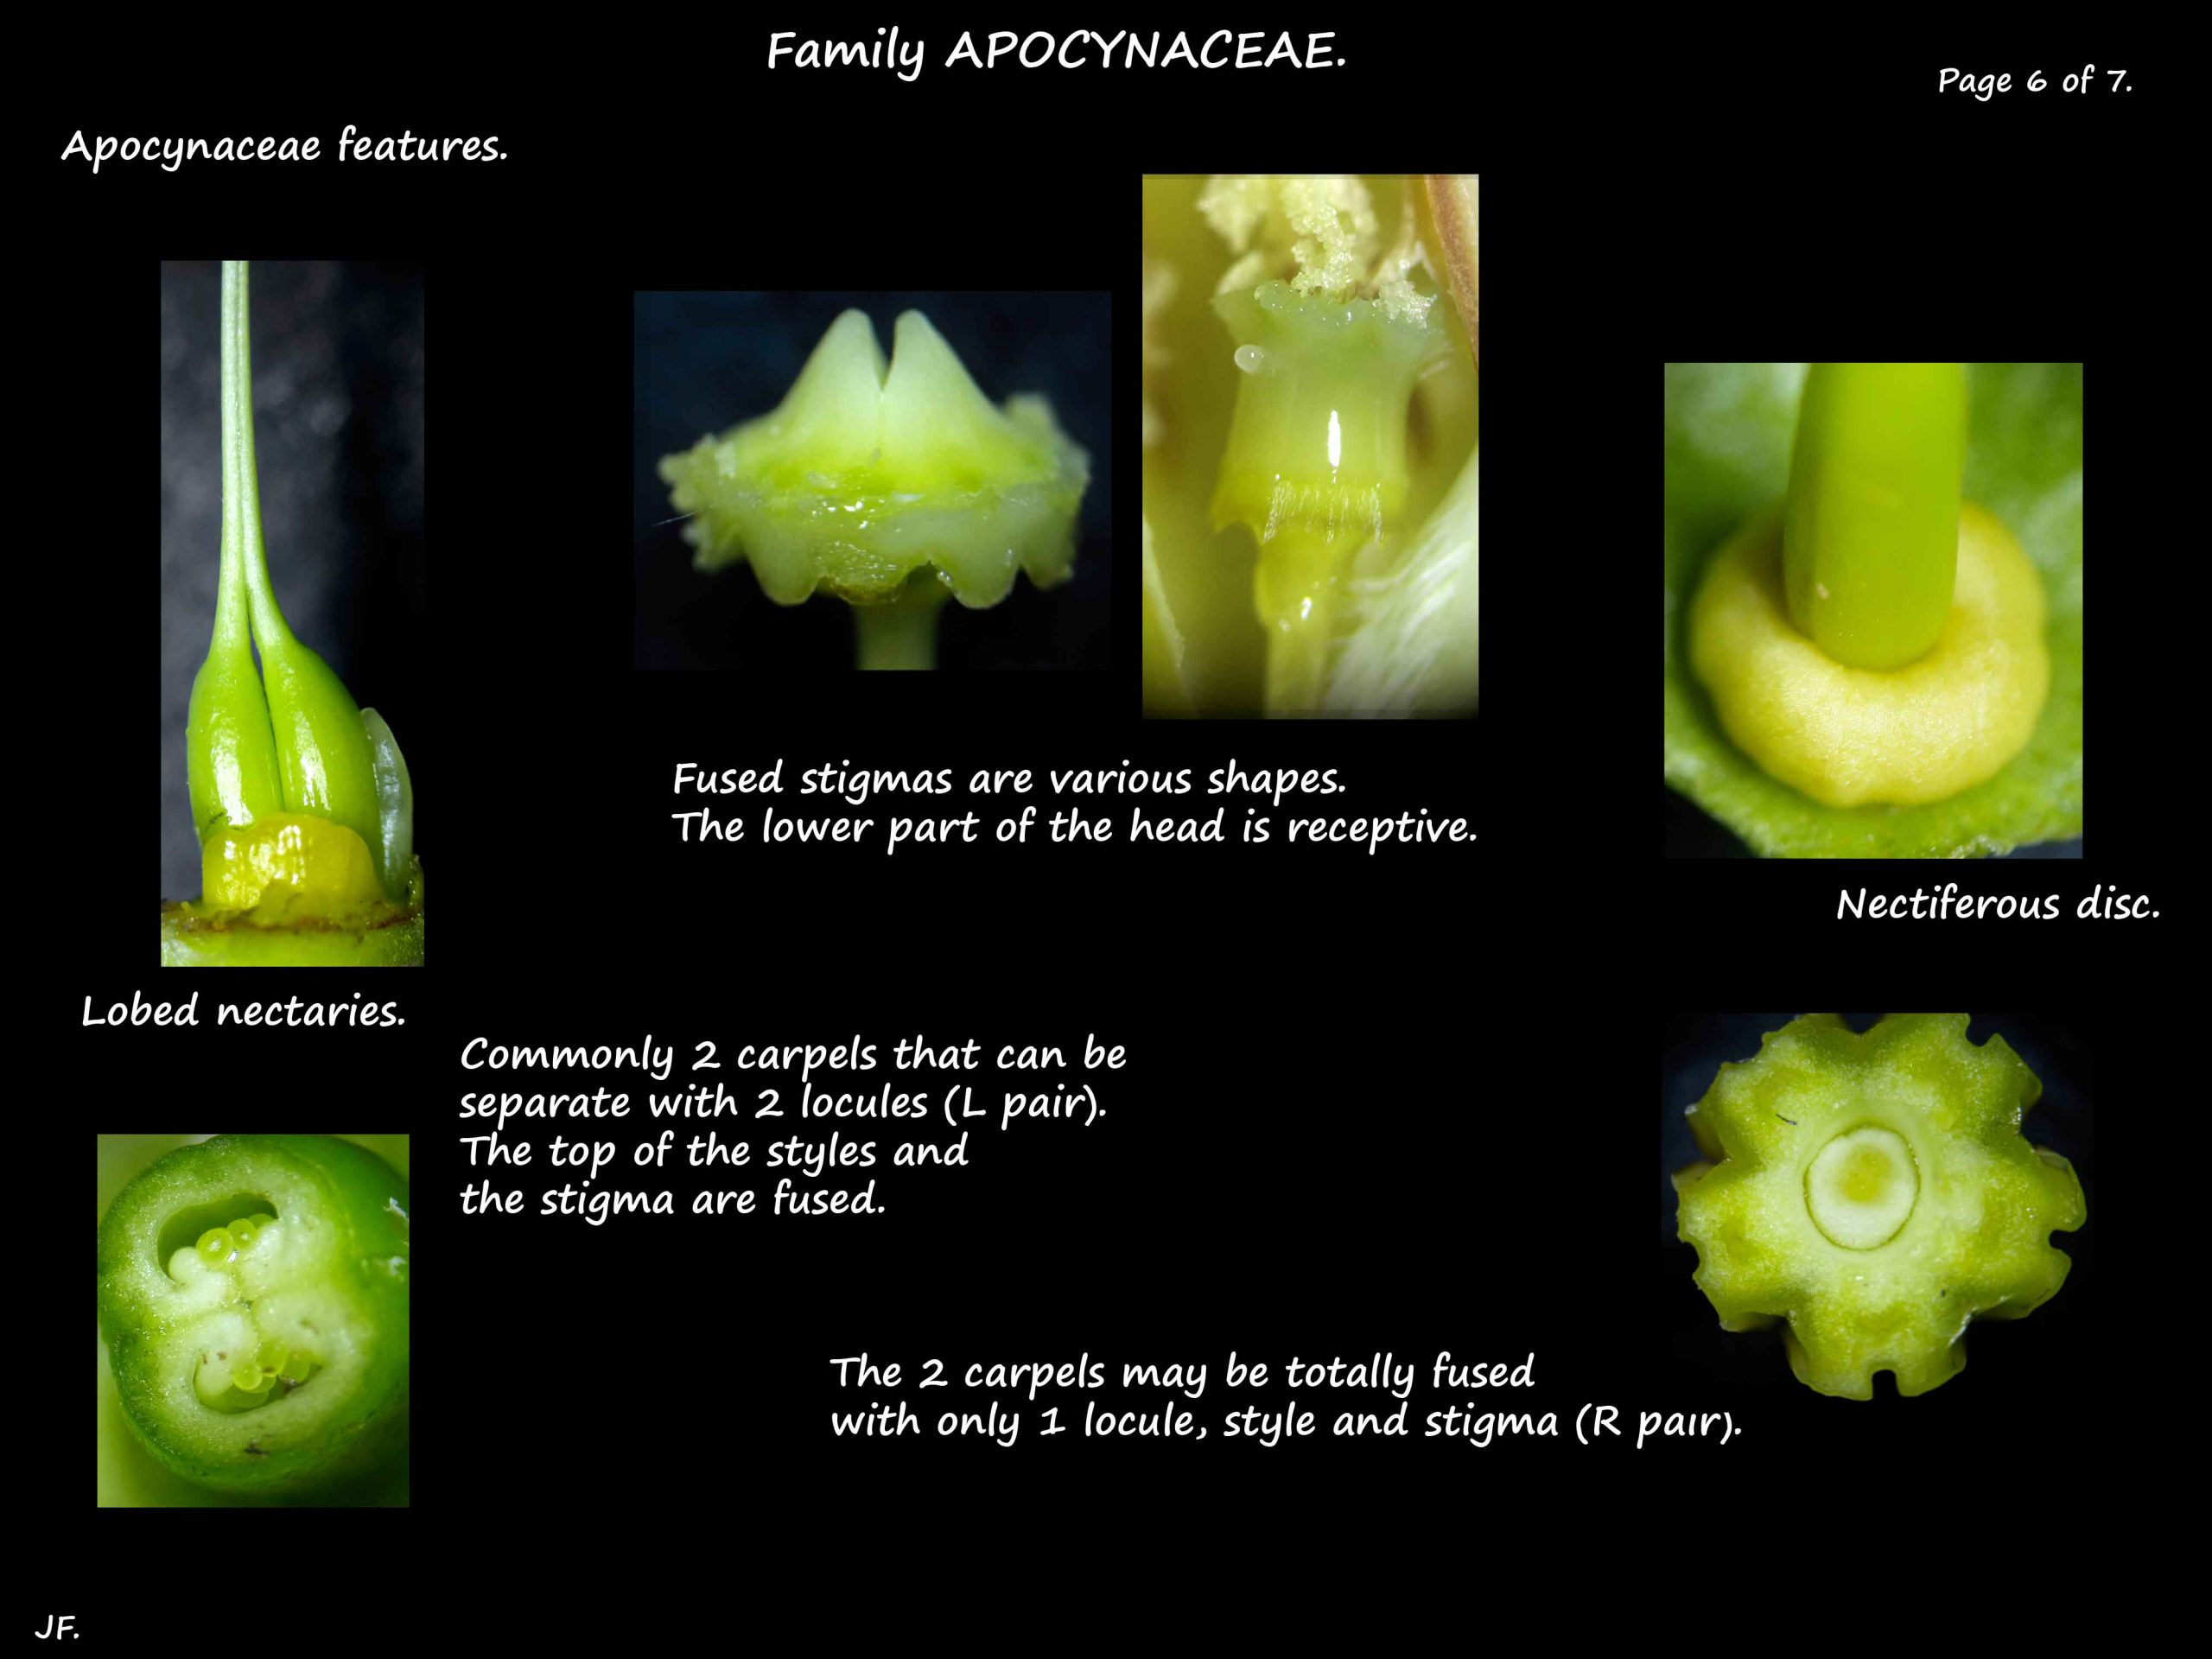 6 Apocynaceae nectaries & ovaries